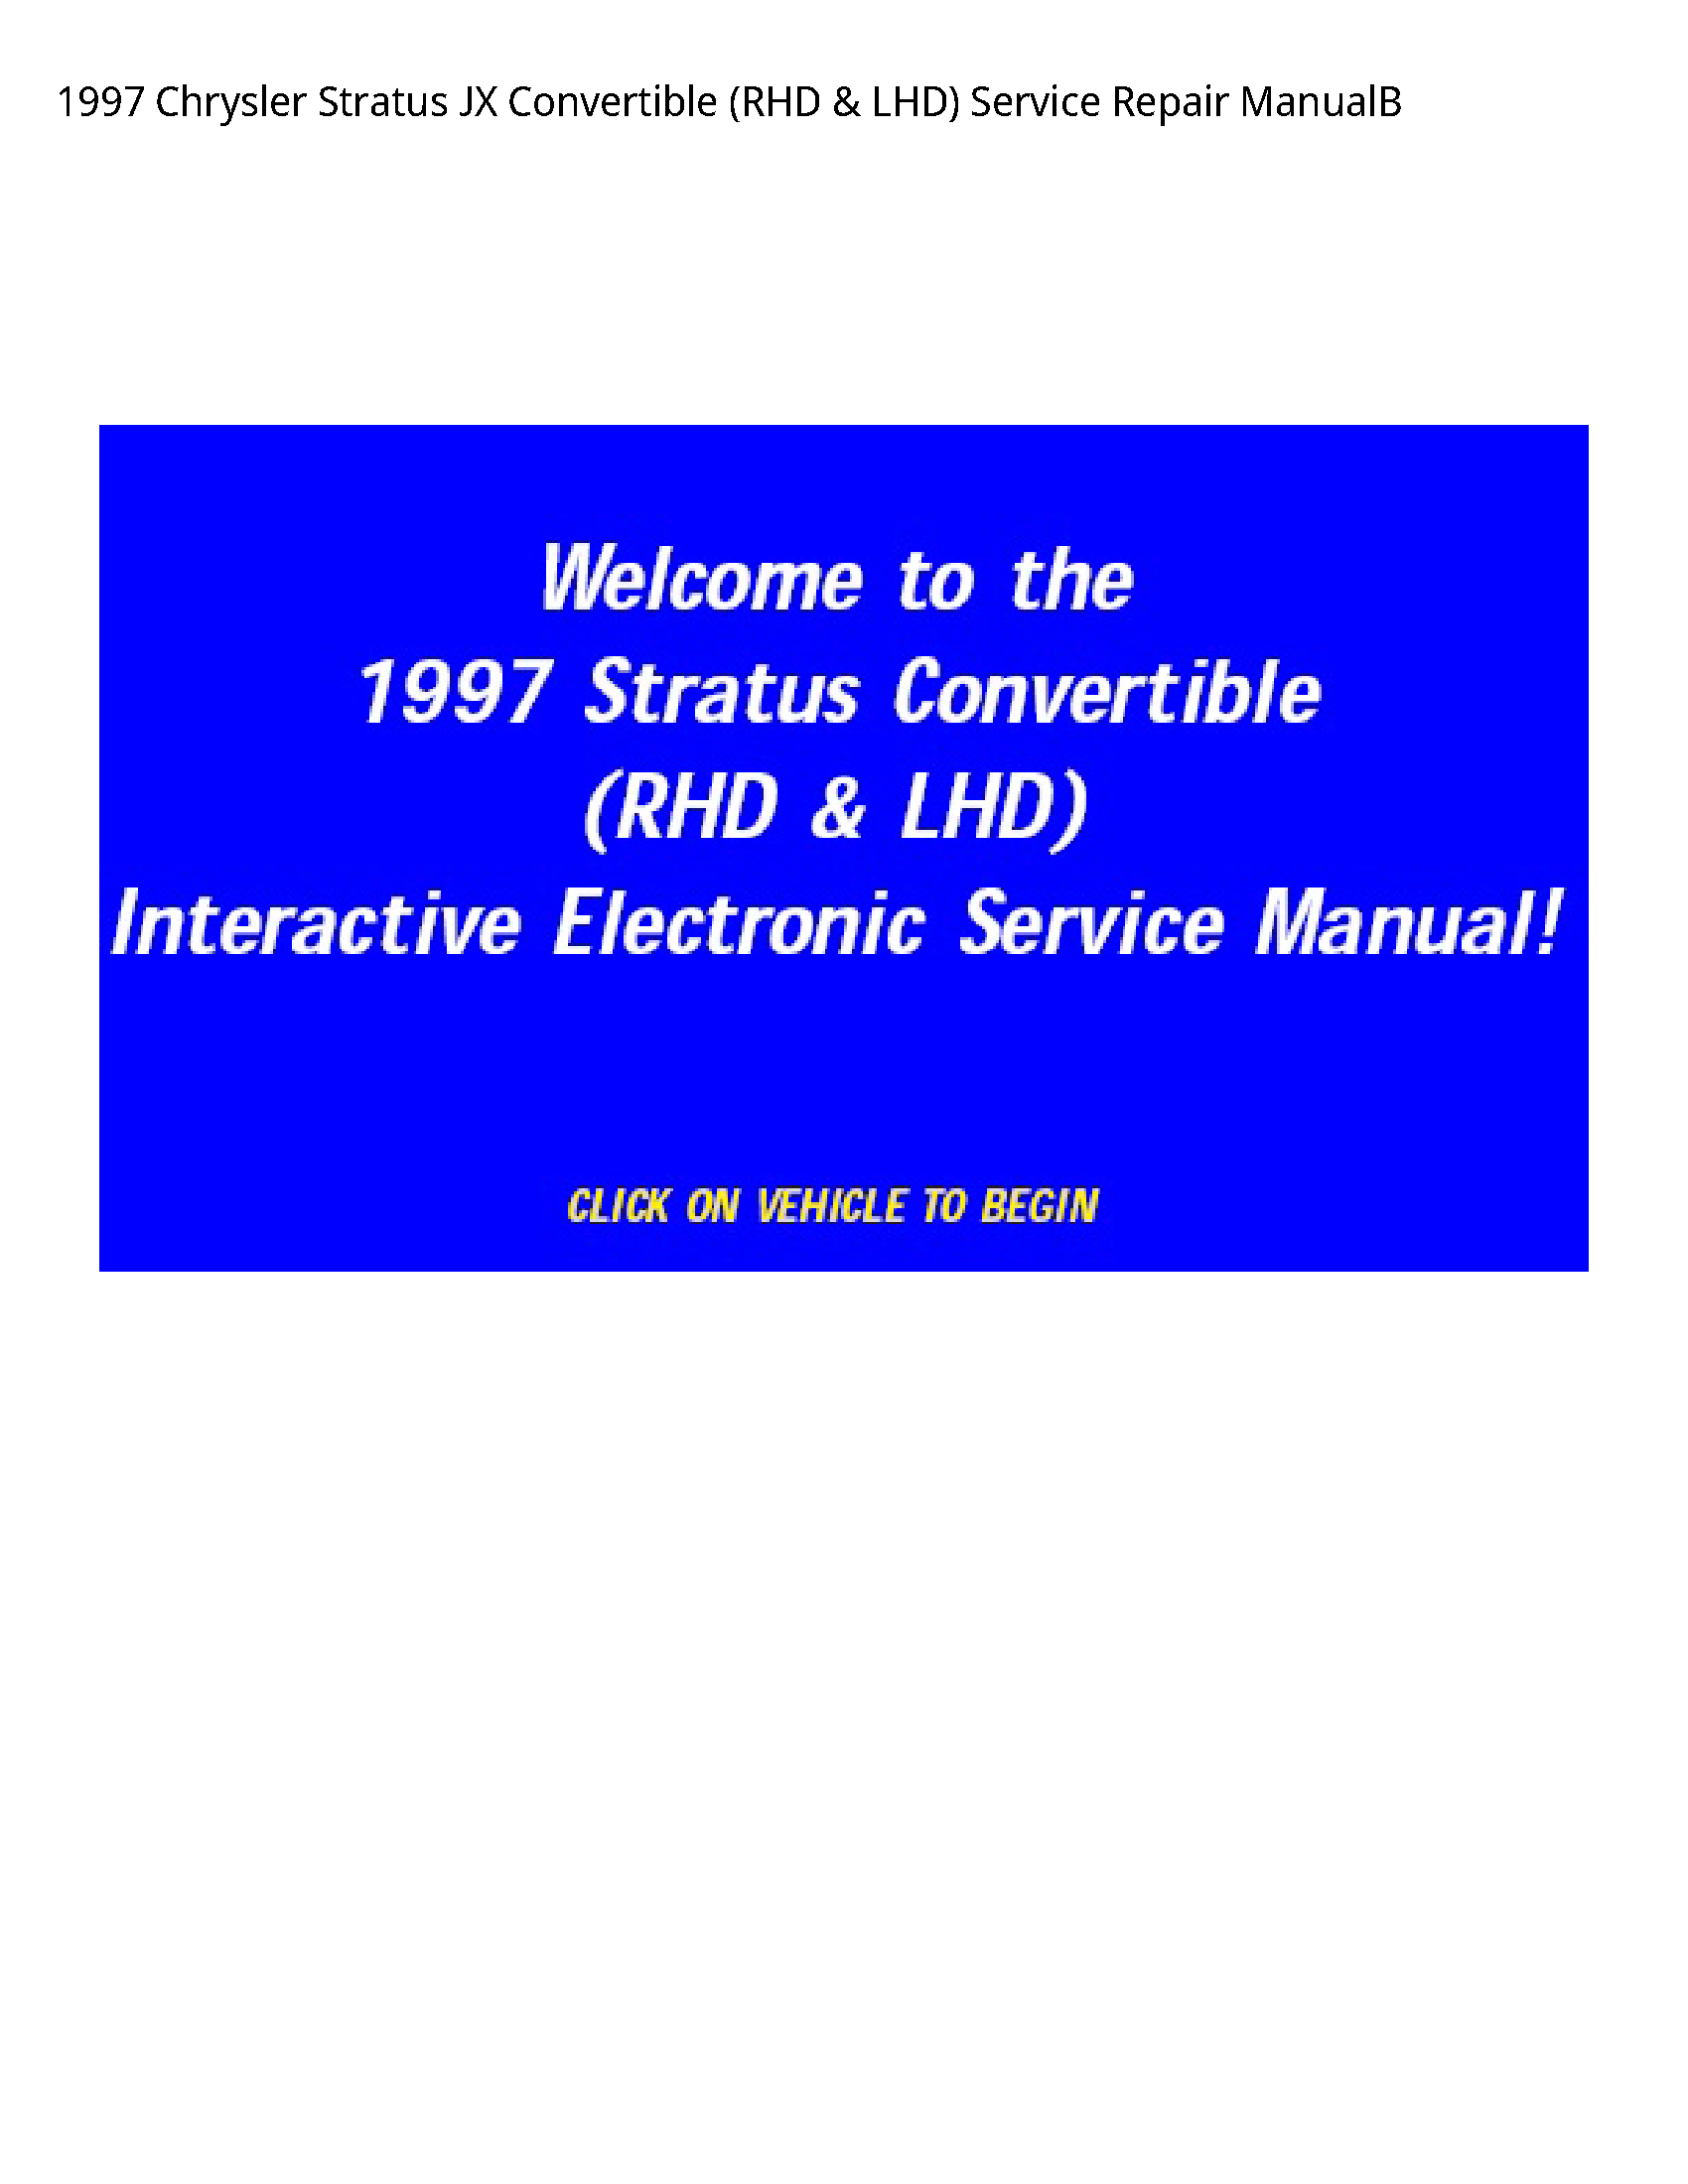 Chrysler Stratus JX Convertible (RHD LHD) manual